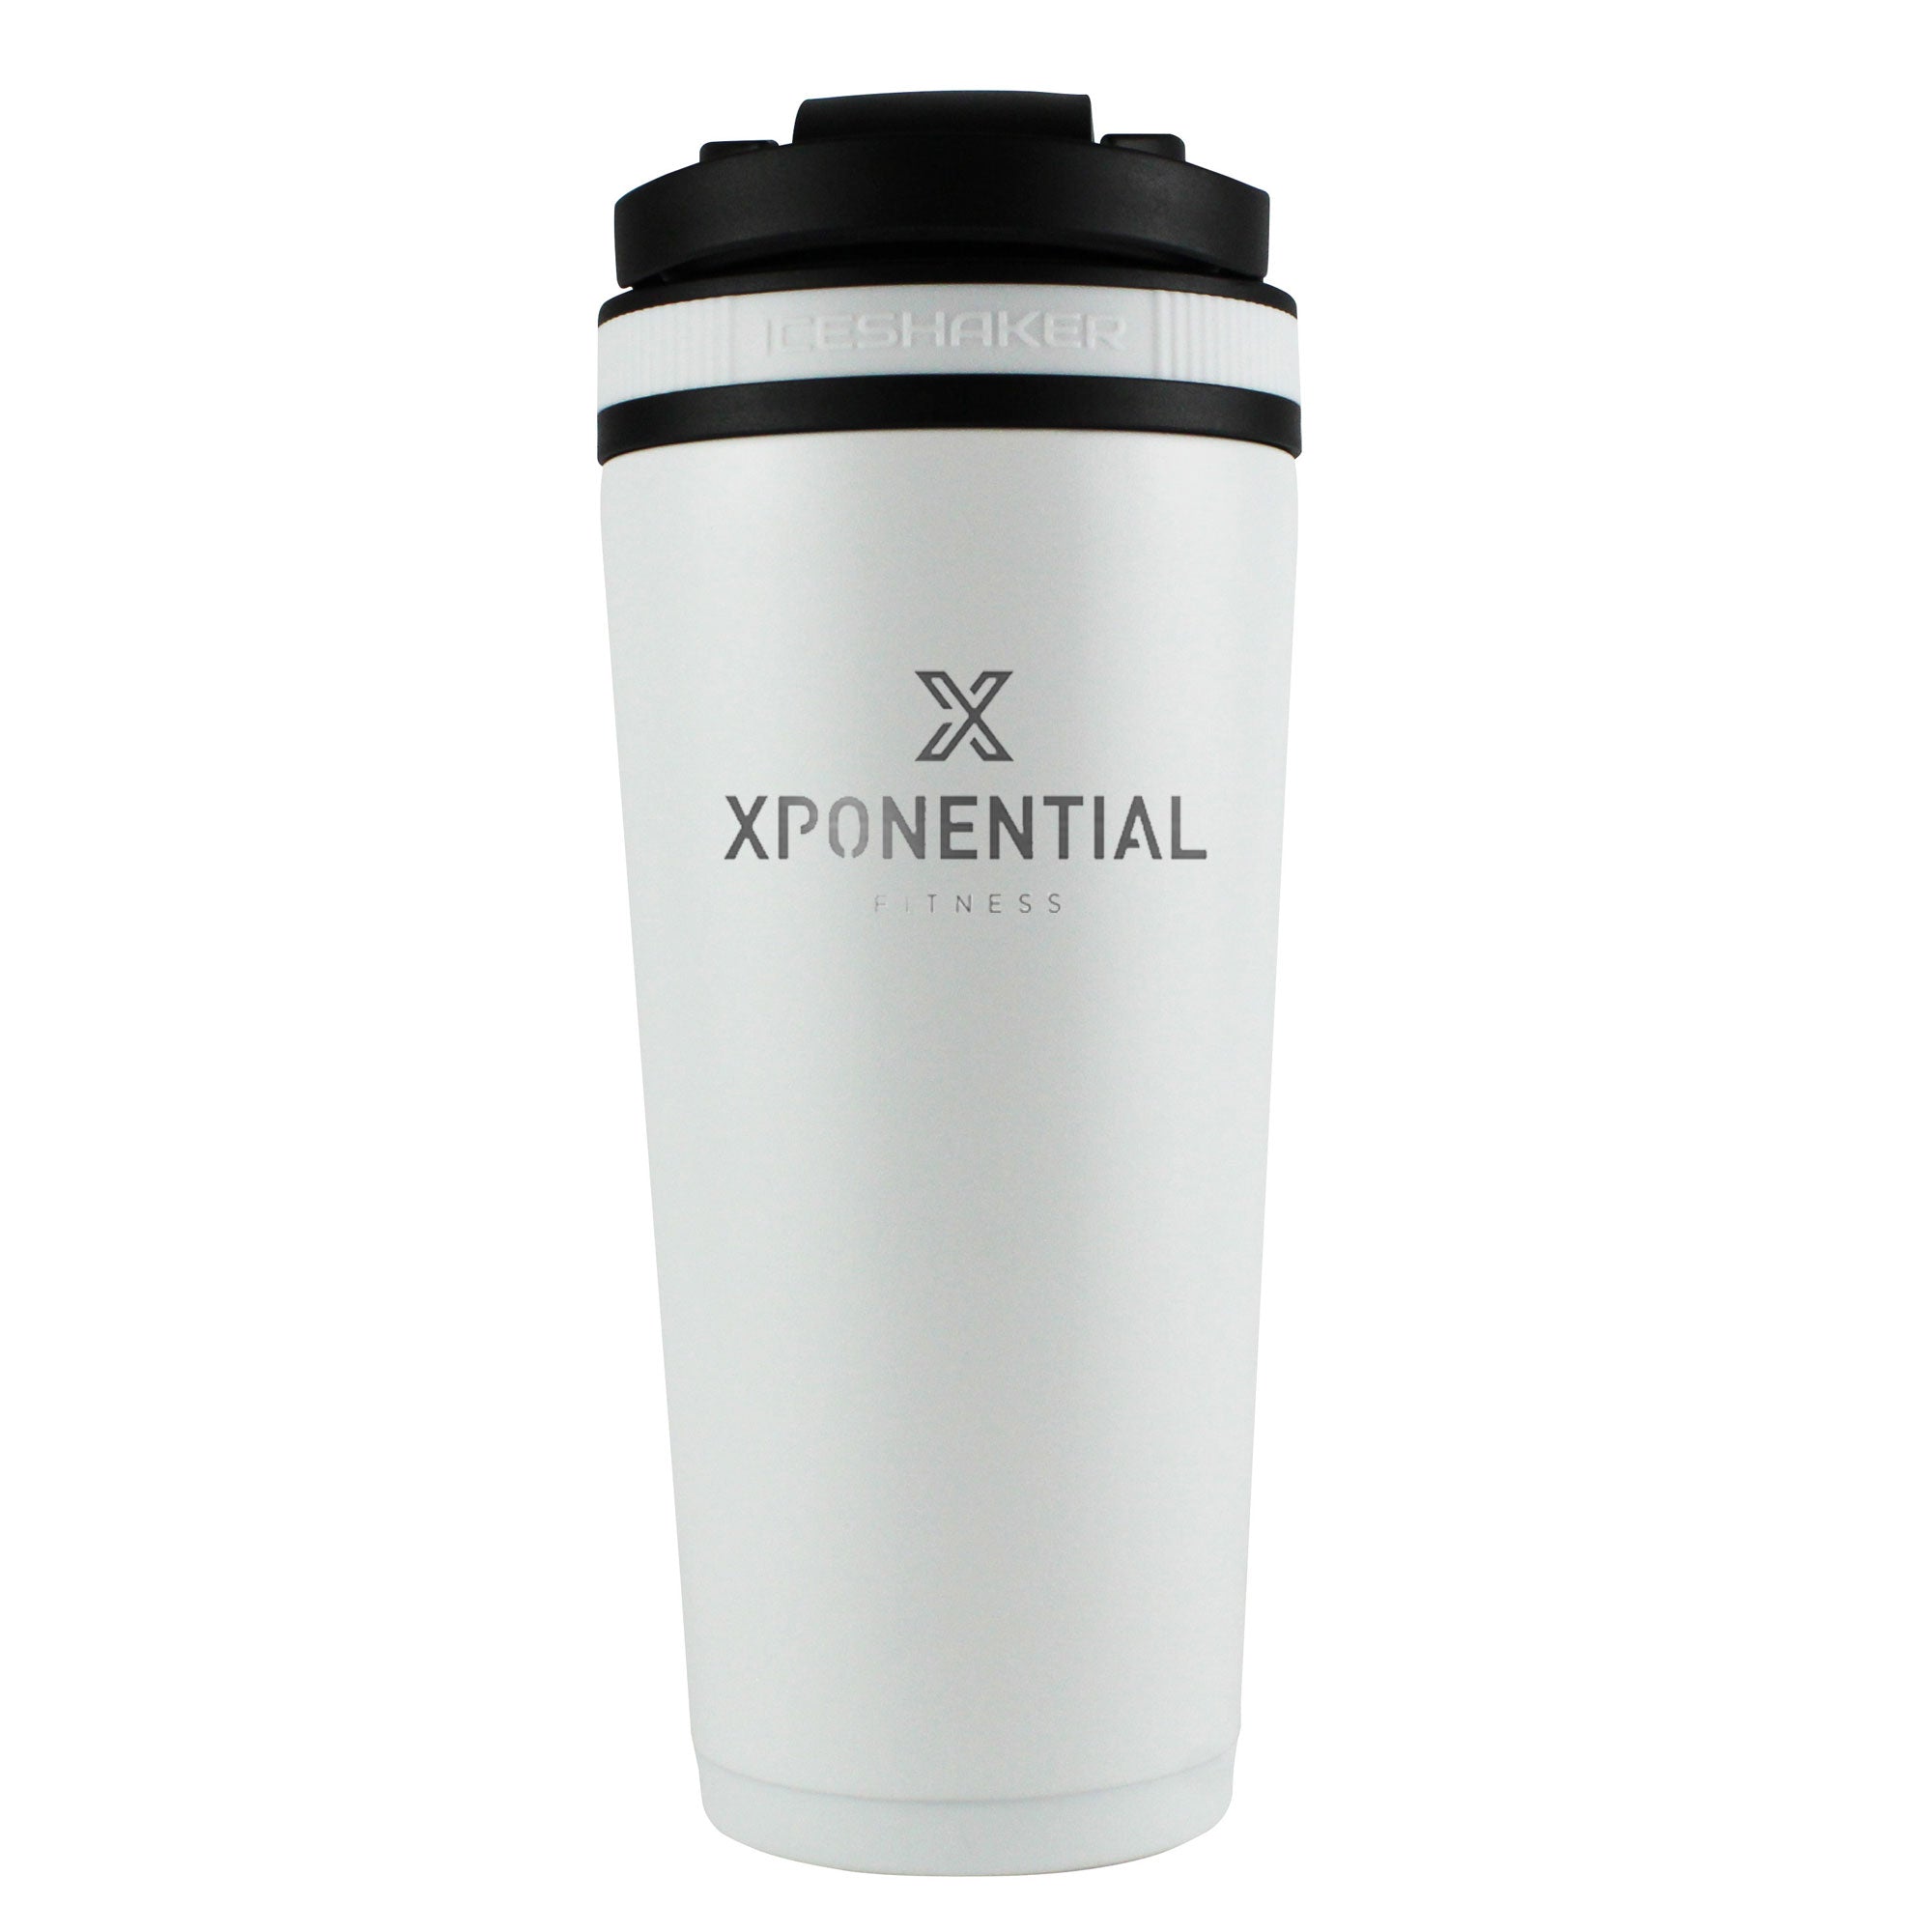 Xponential Fitness White 26oz Ice Shaker - Horizontal